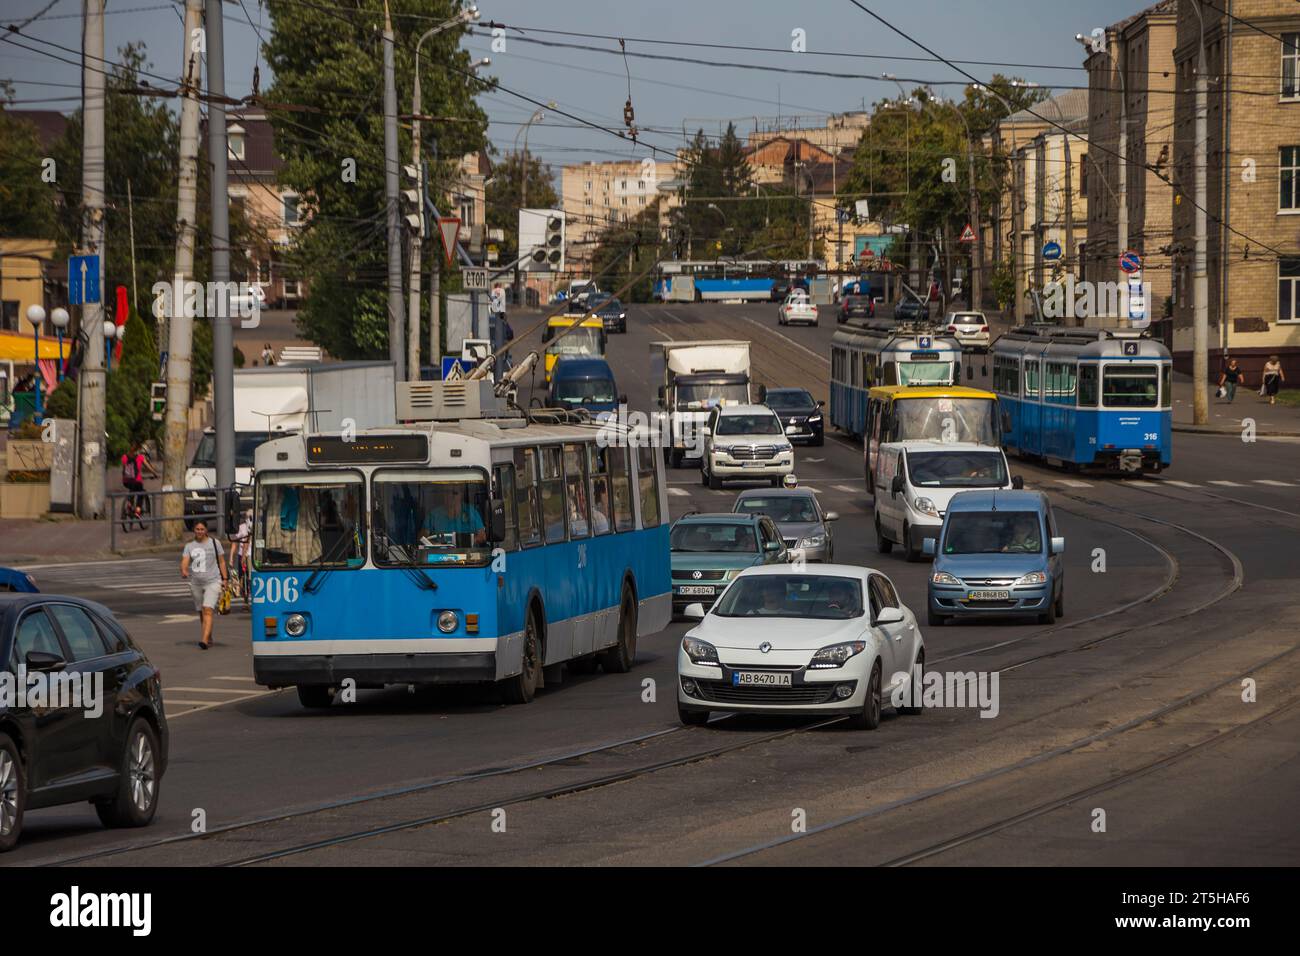 17.08.2021. Ukraine, Vinnytsia. Urban electric transport - tram and trolleybus. Stock Photo